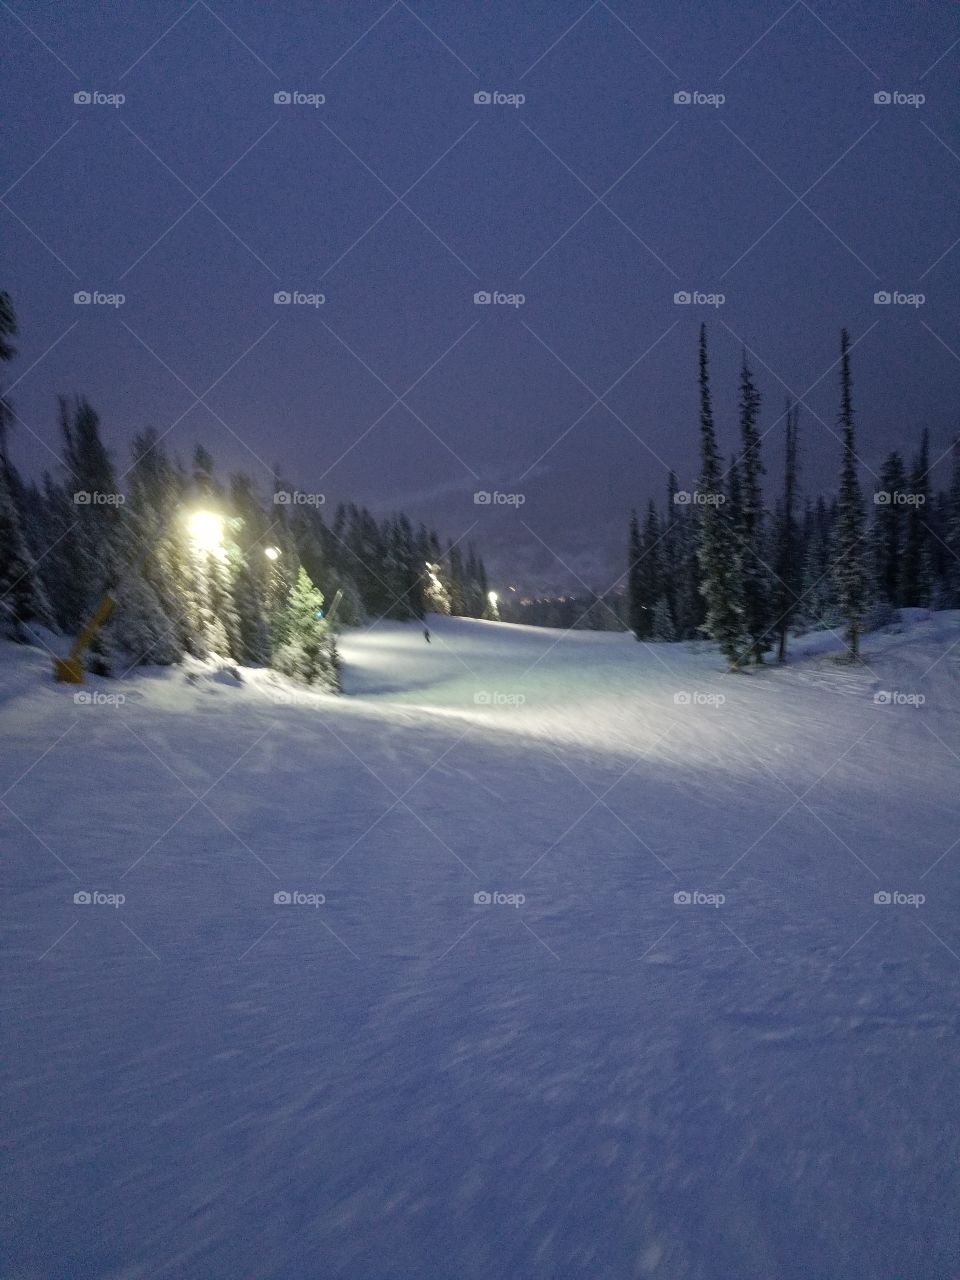 Night skiing on mountain